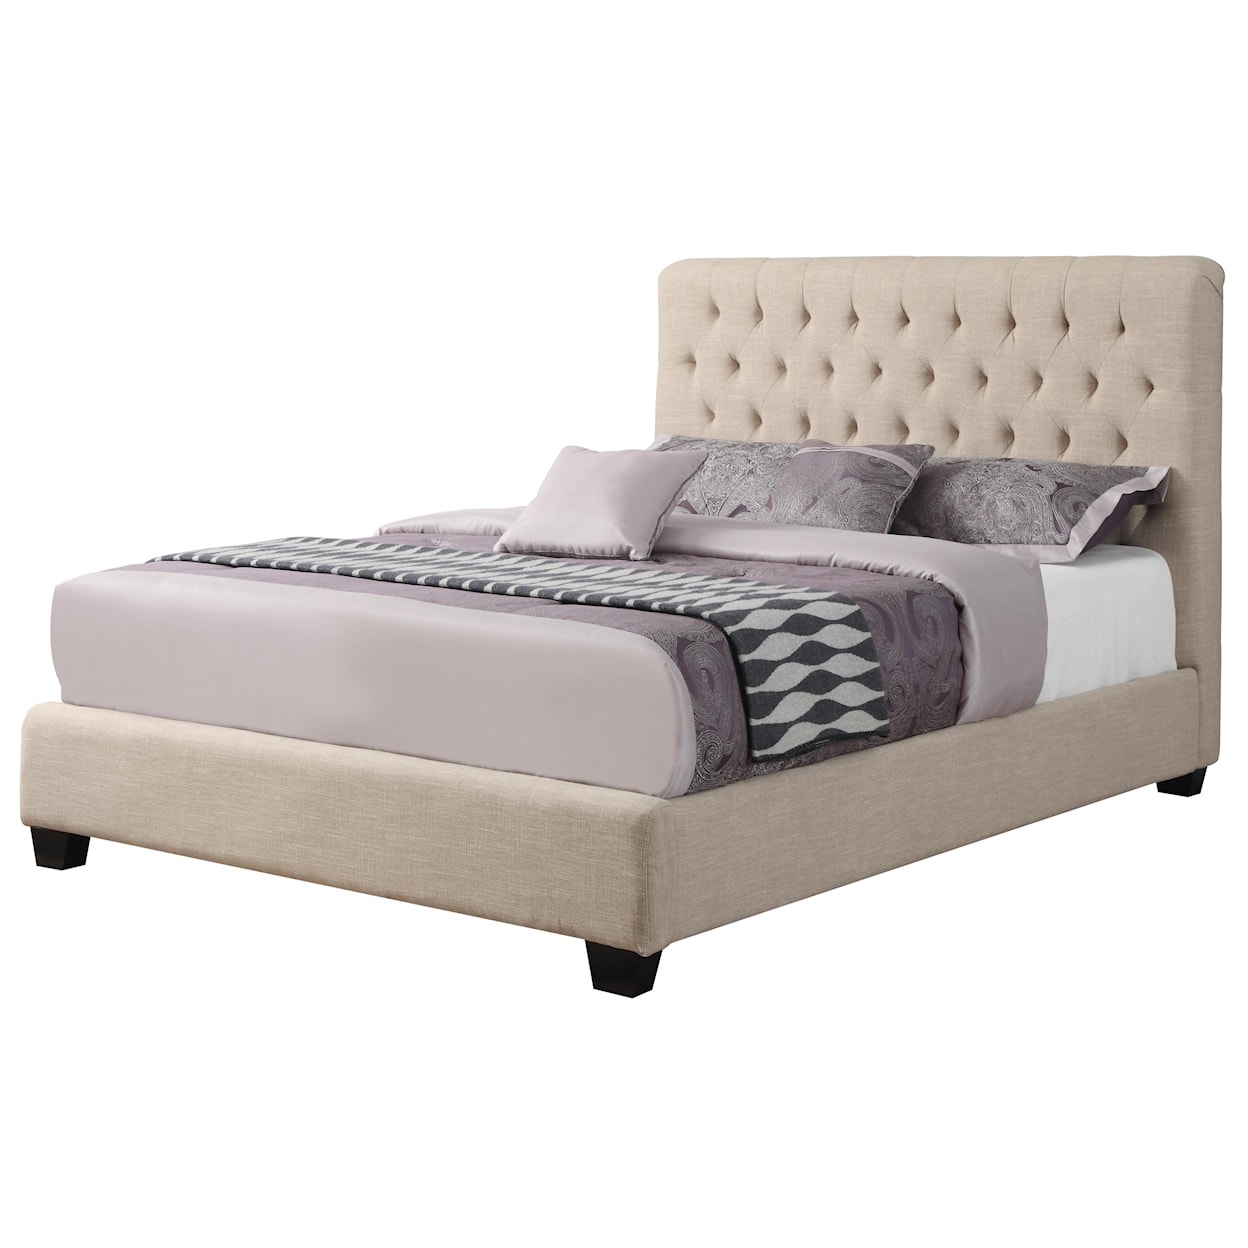 Coaster Upholstered Beds Queen Chloe Upholstered Bed